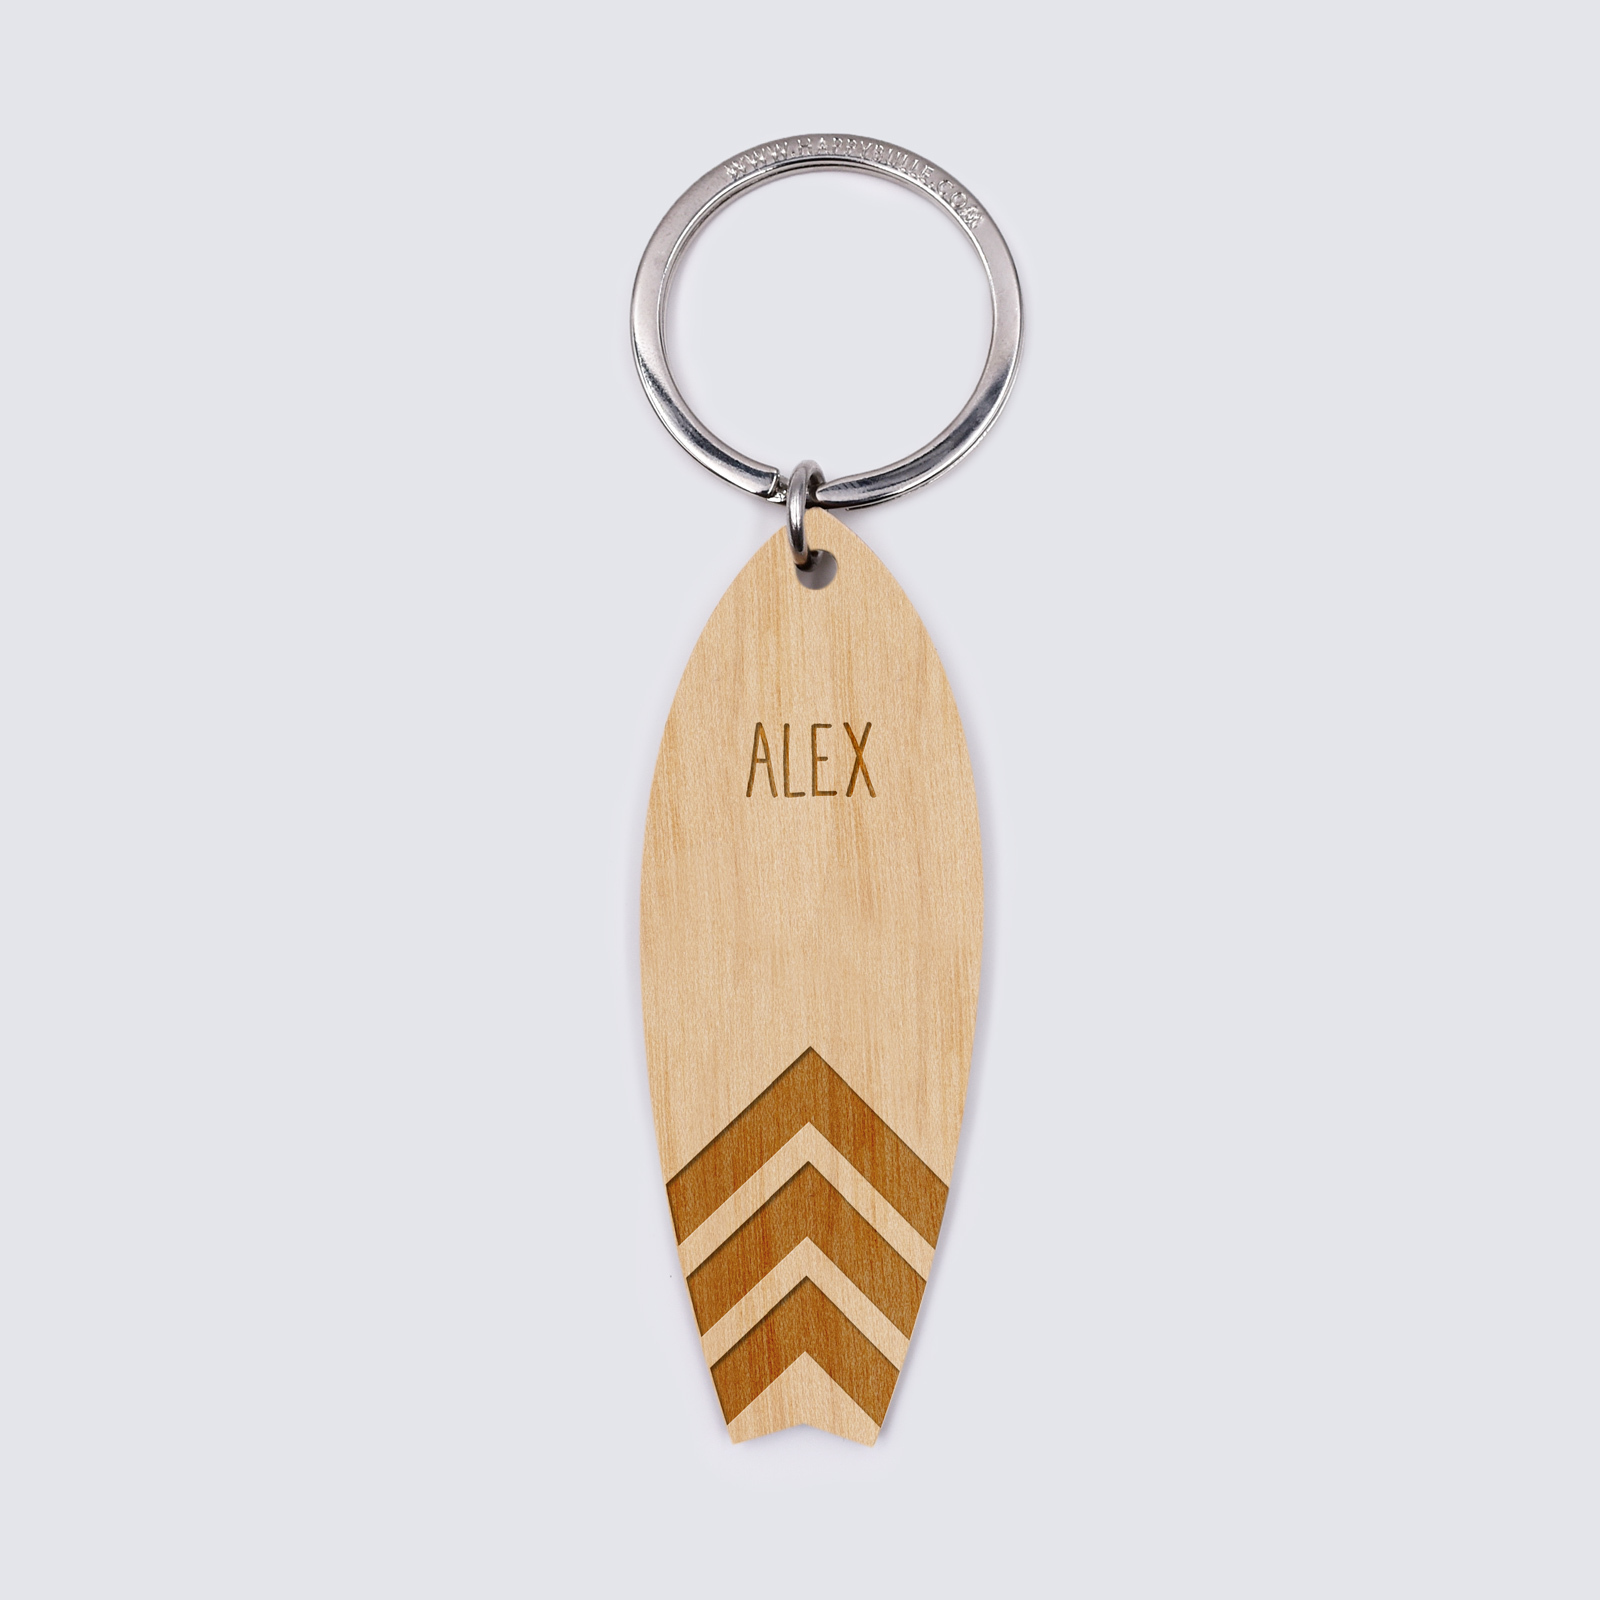 Personalised engraved wooden Surfboard medallion keyring